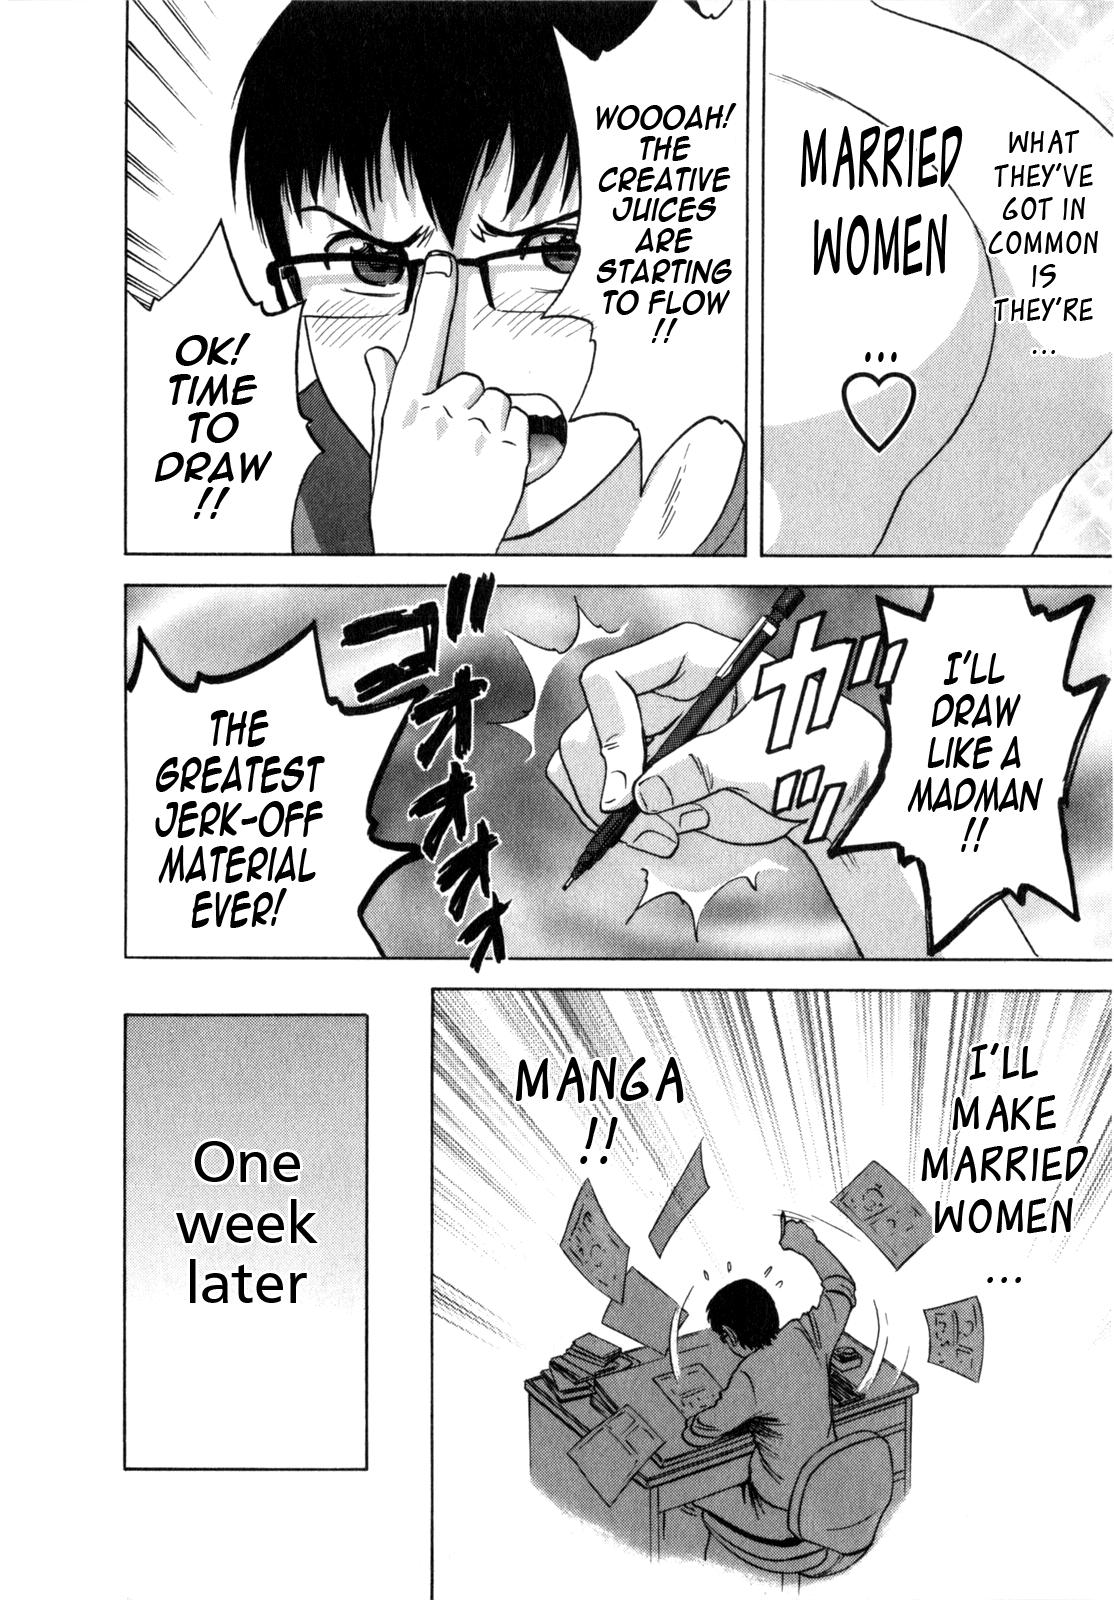 Life with Married Women Just Like a Manga 1 67